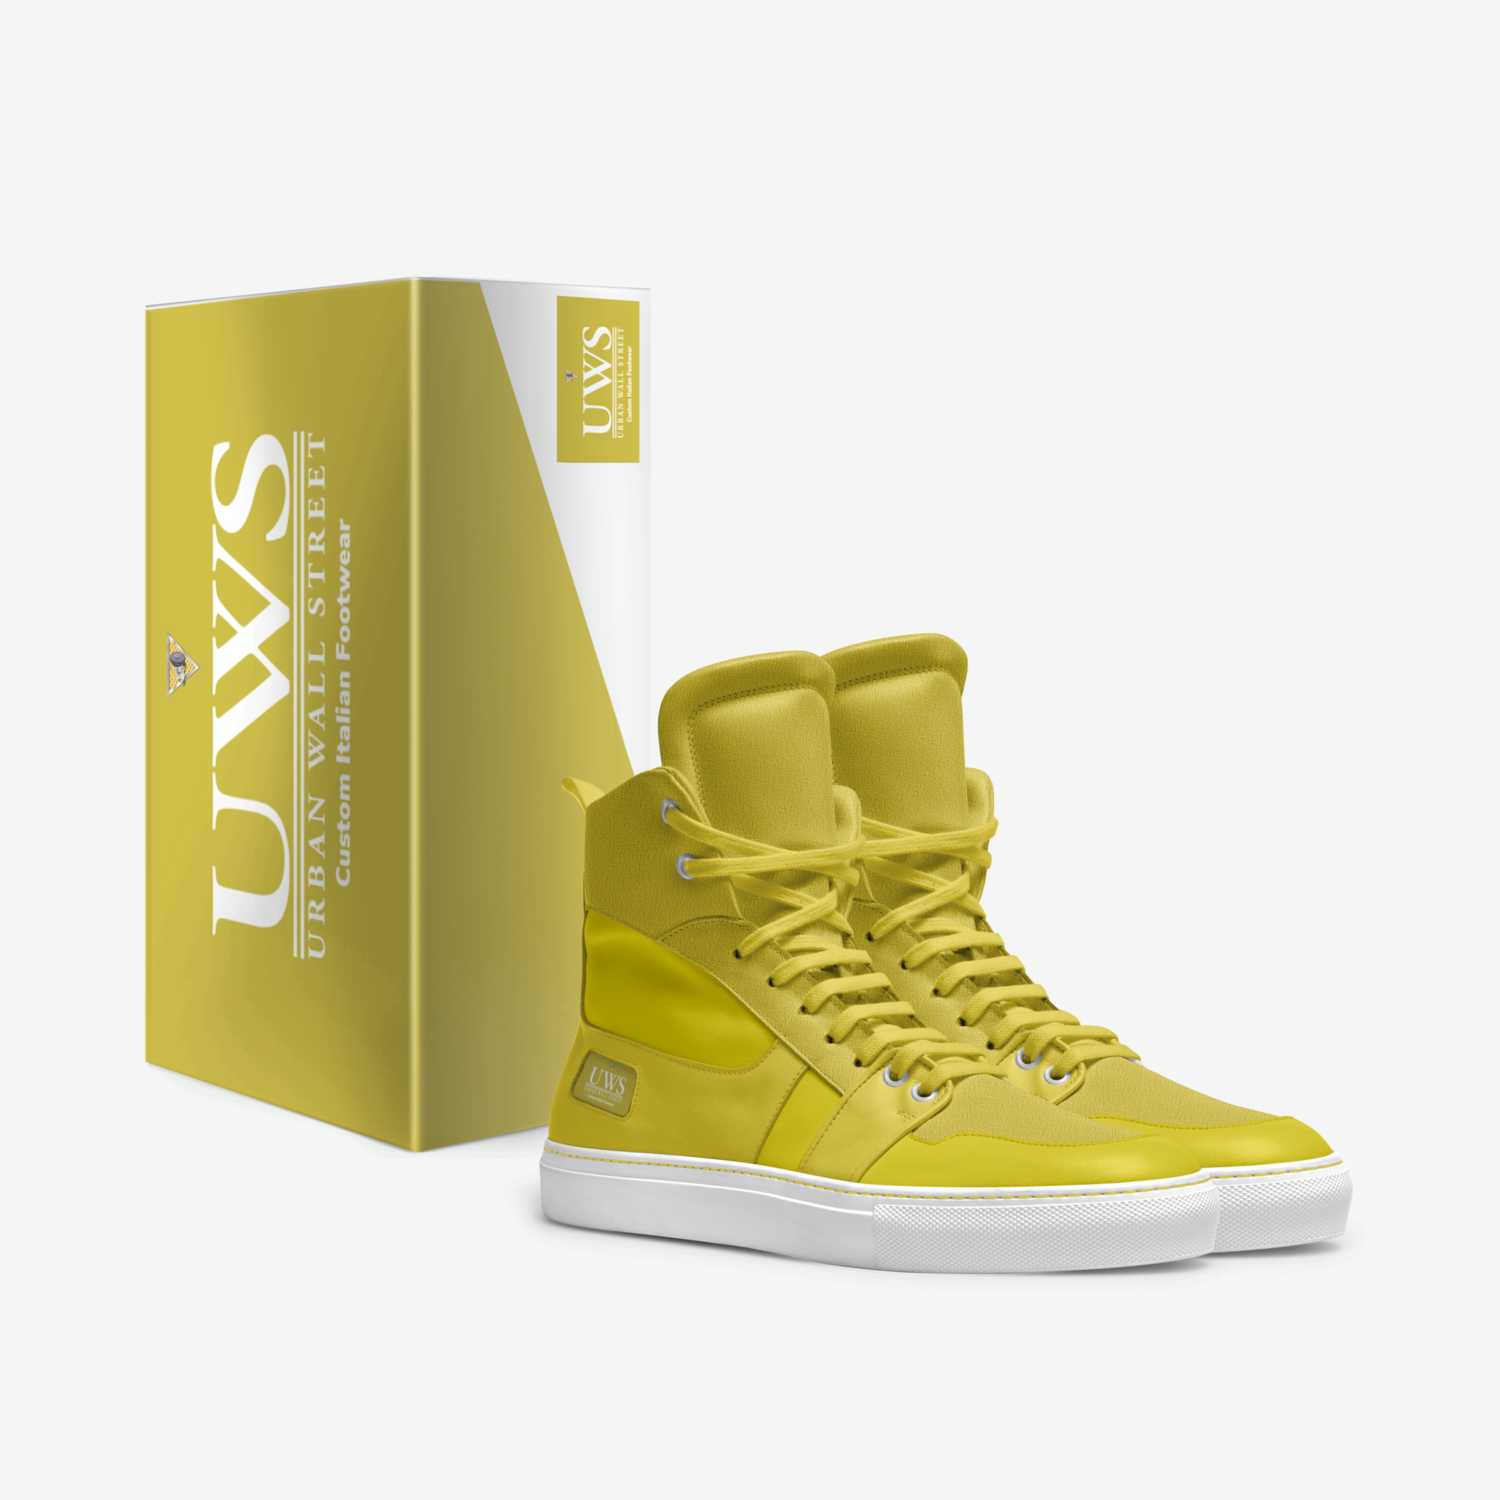 BKNY YELLOWZ custom made in Italy shoes by Urbanwallstreet Earl | Box view